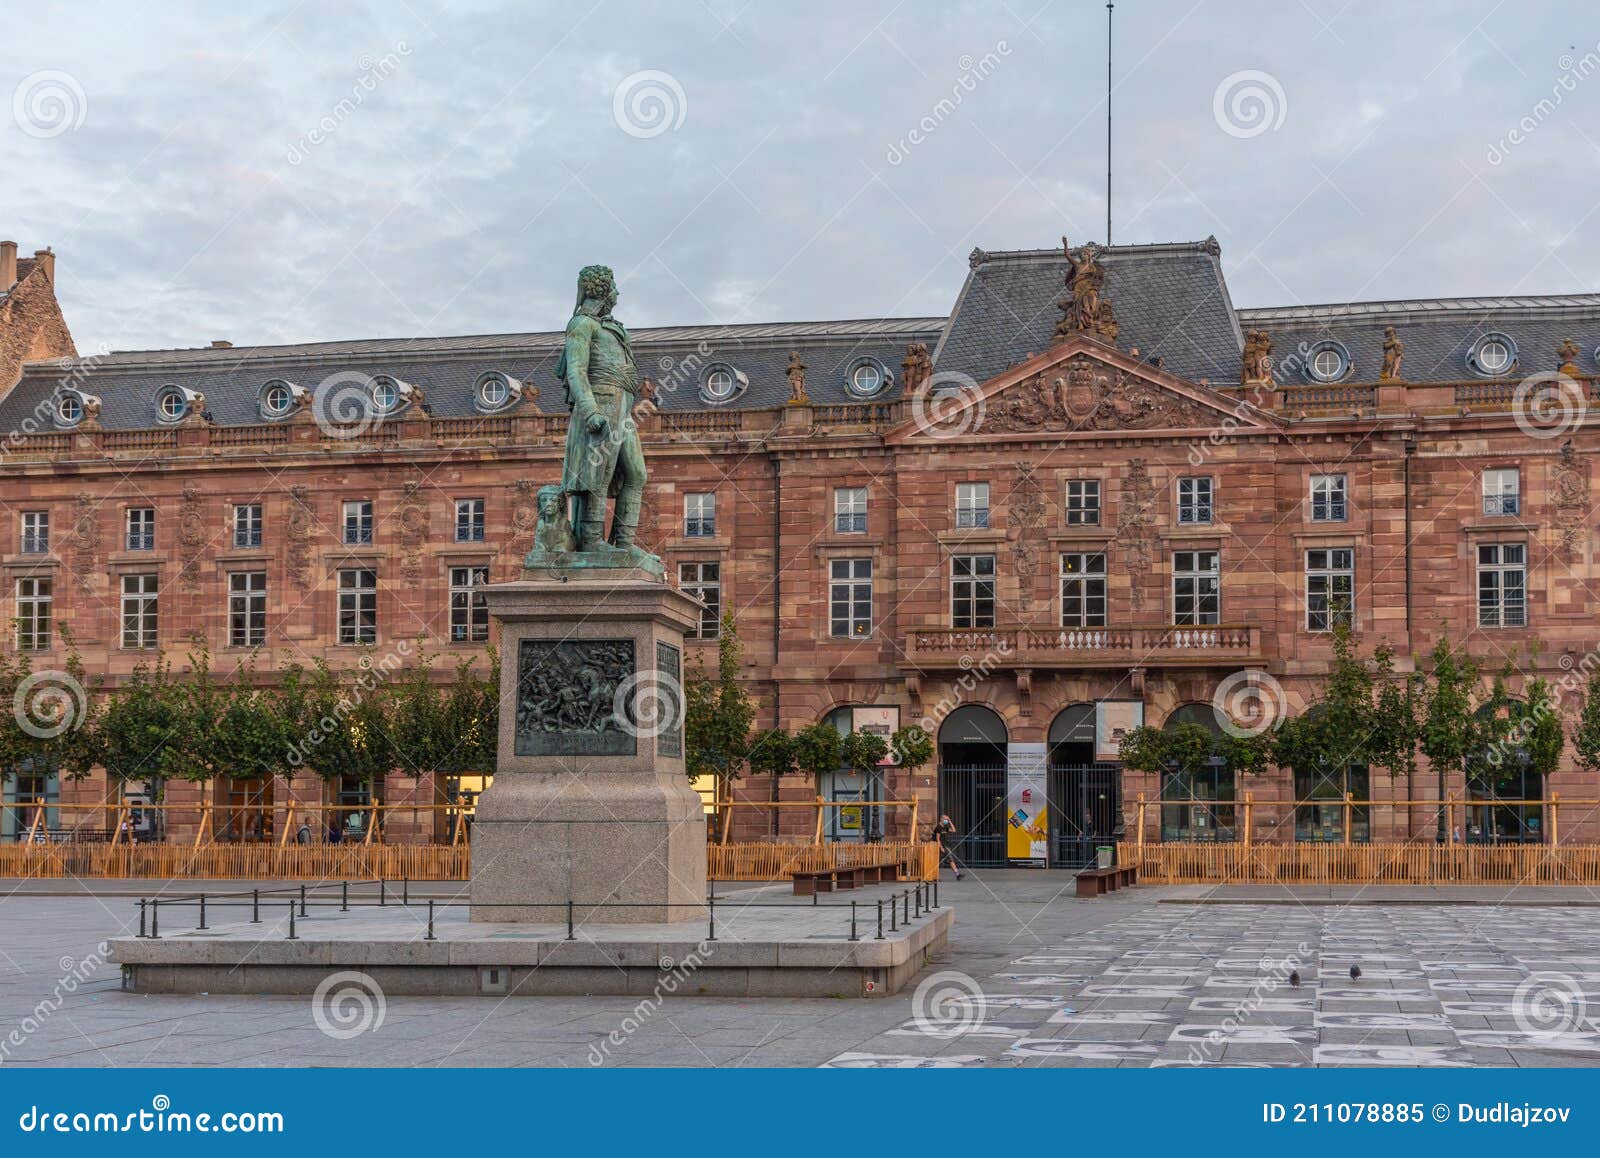 Kleber Square in the Old Town of Strasbourg, France Stock Image - Image ...